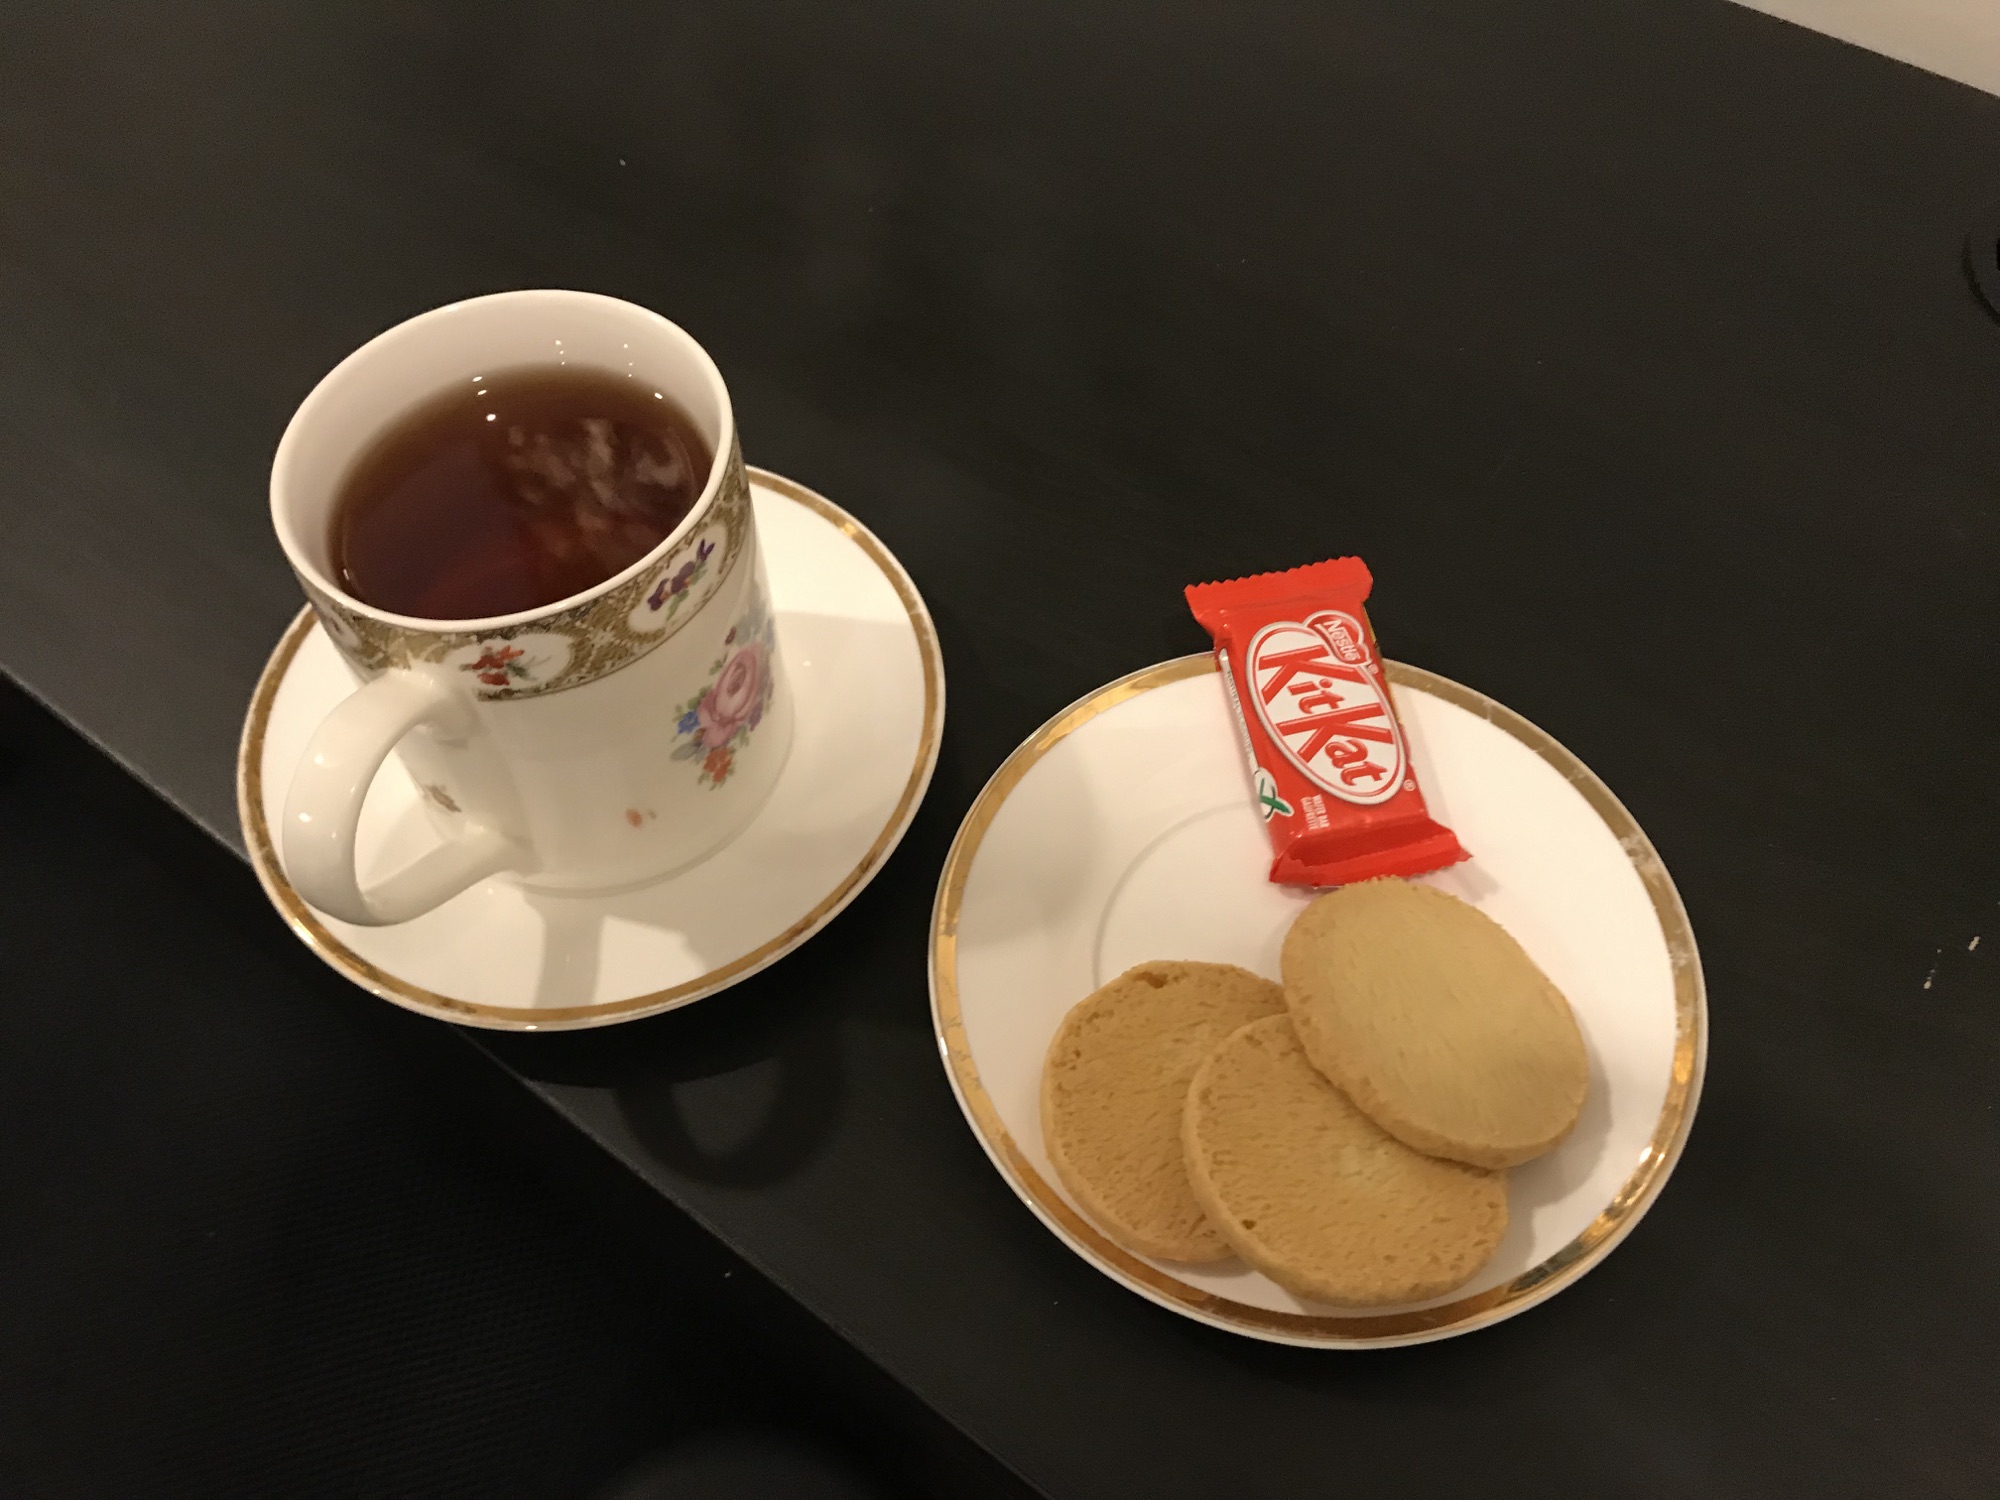 Tea and cookies to welcome me